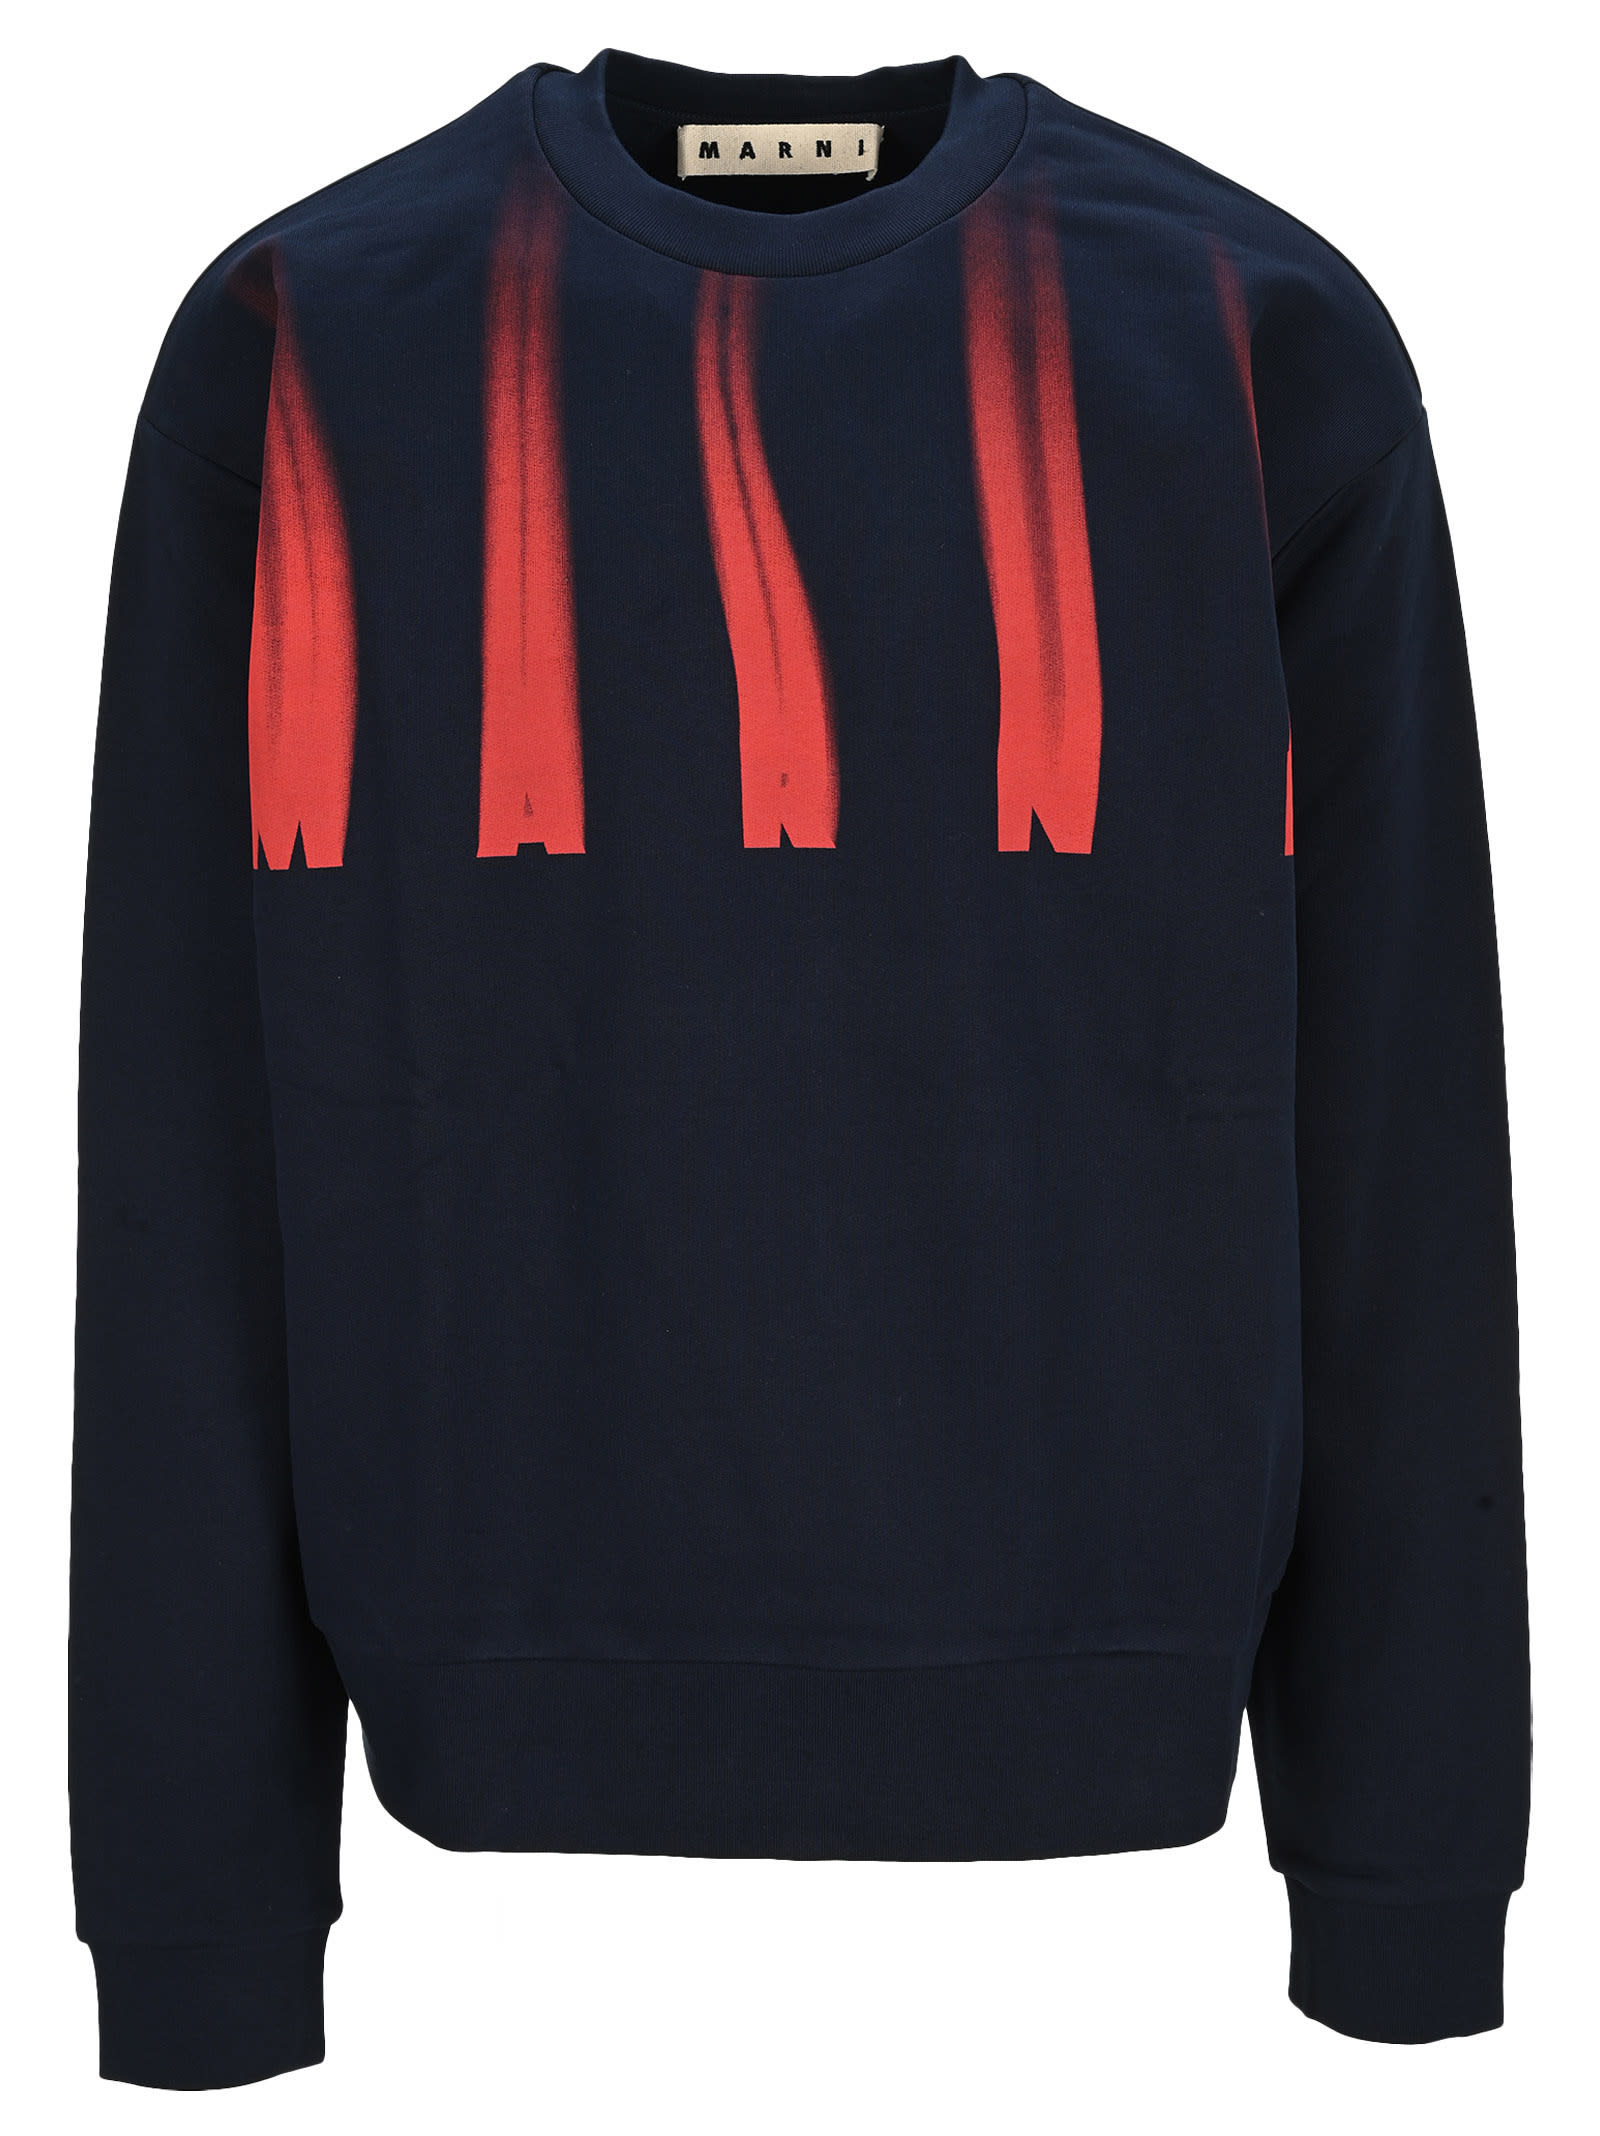 Marni Distorted Logo Sweatshirt